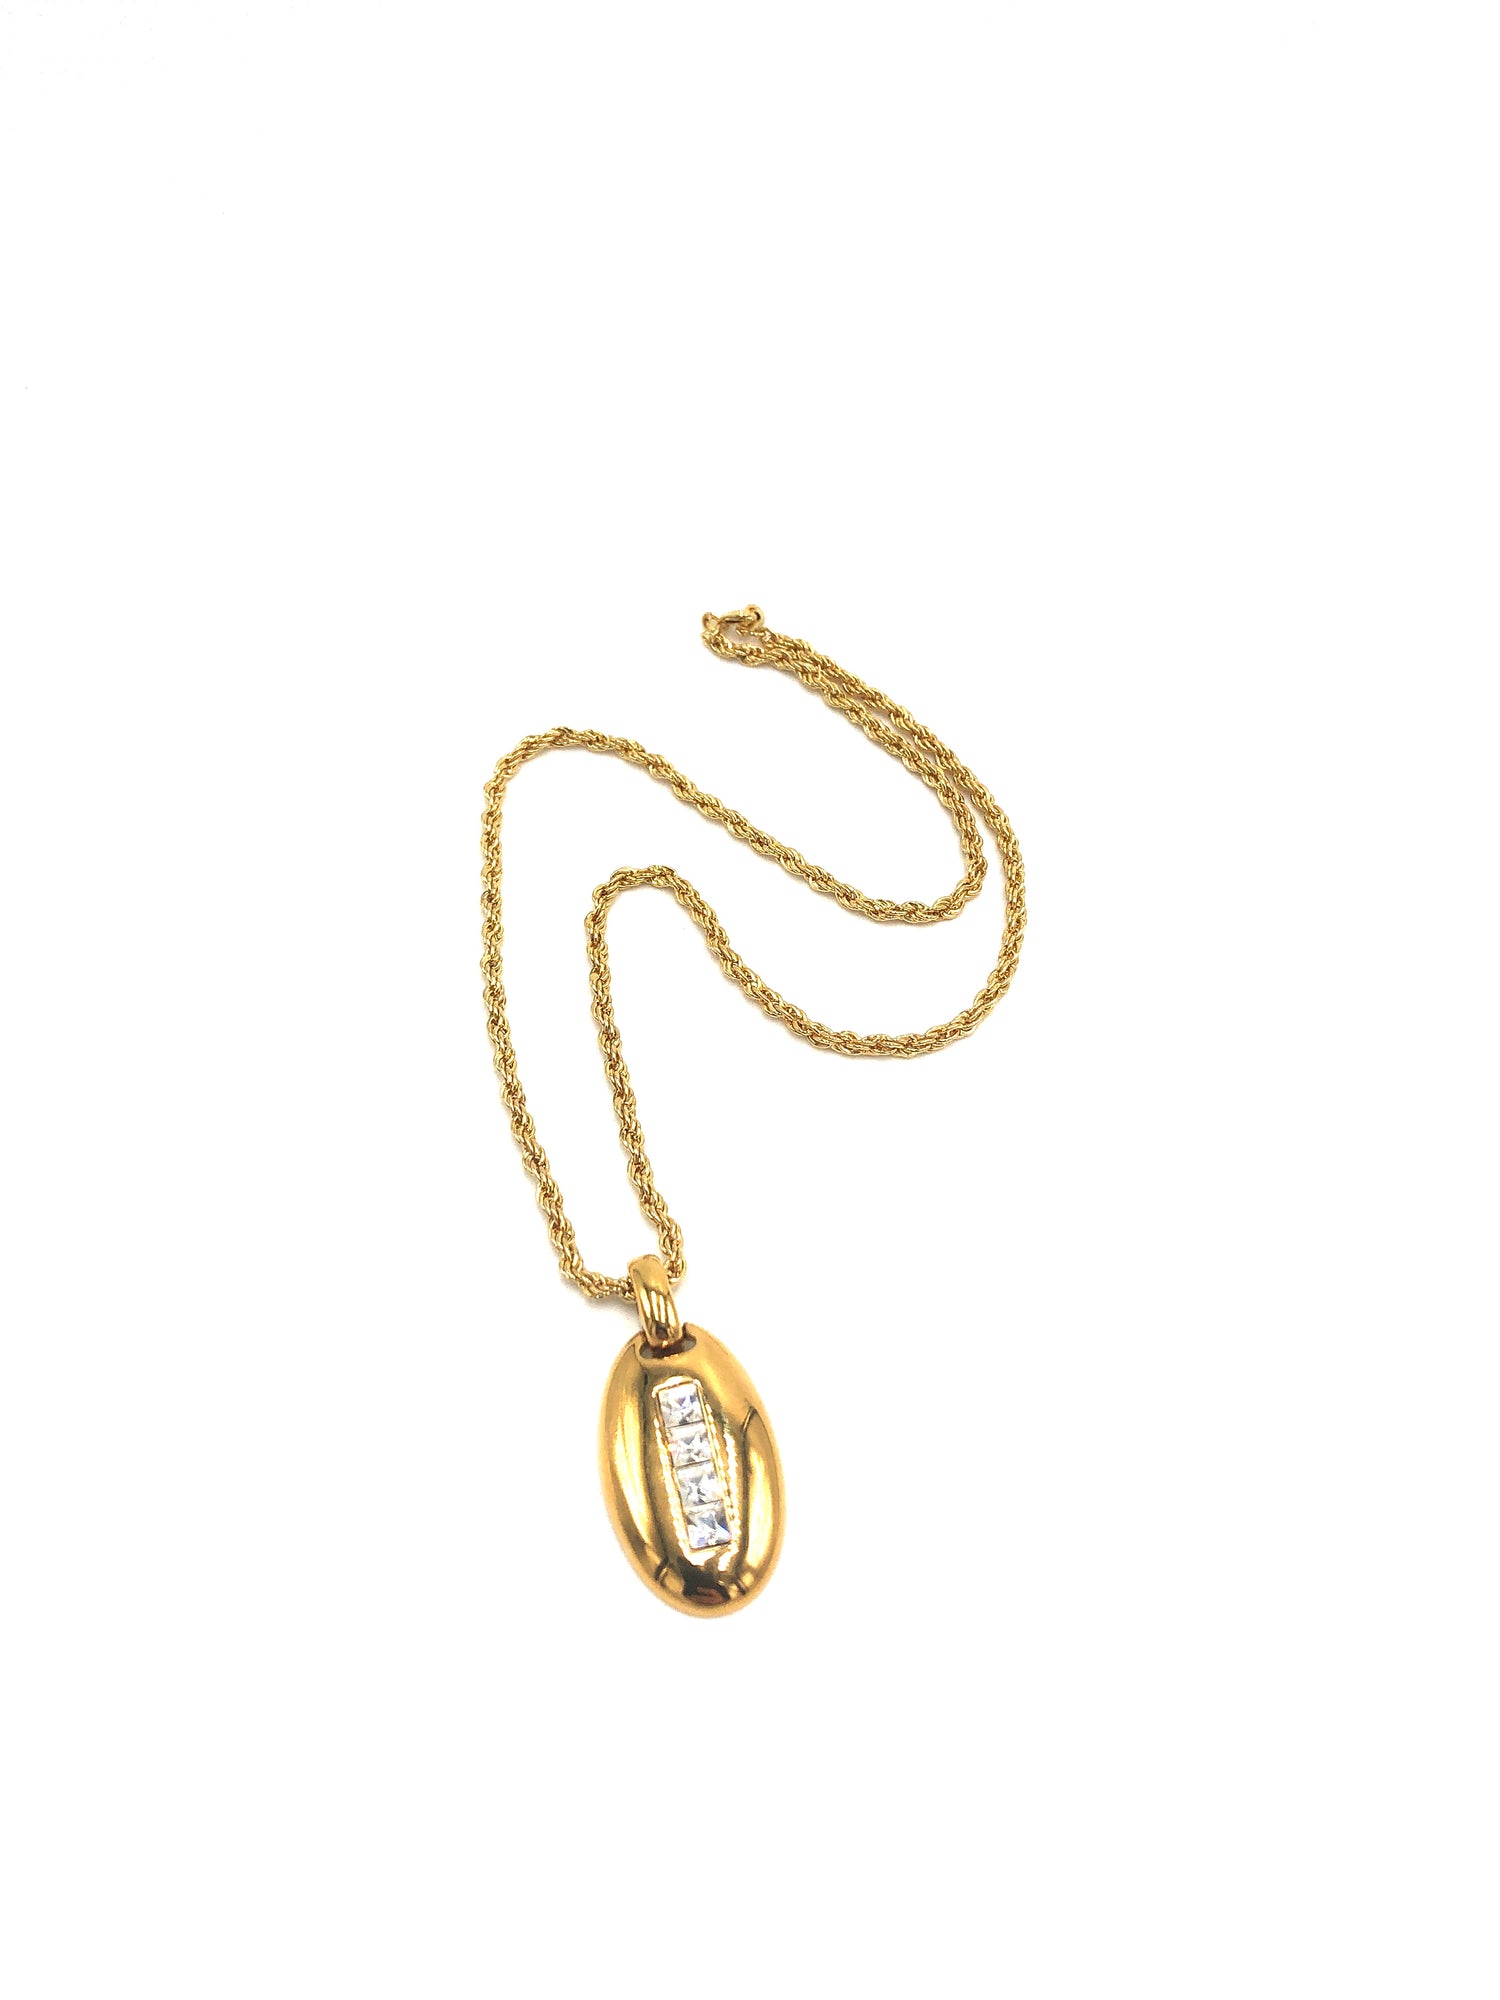 Finery Vintage Necklace - Gold